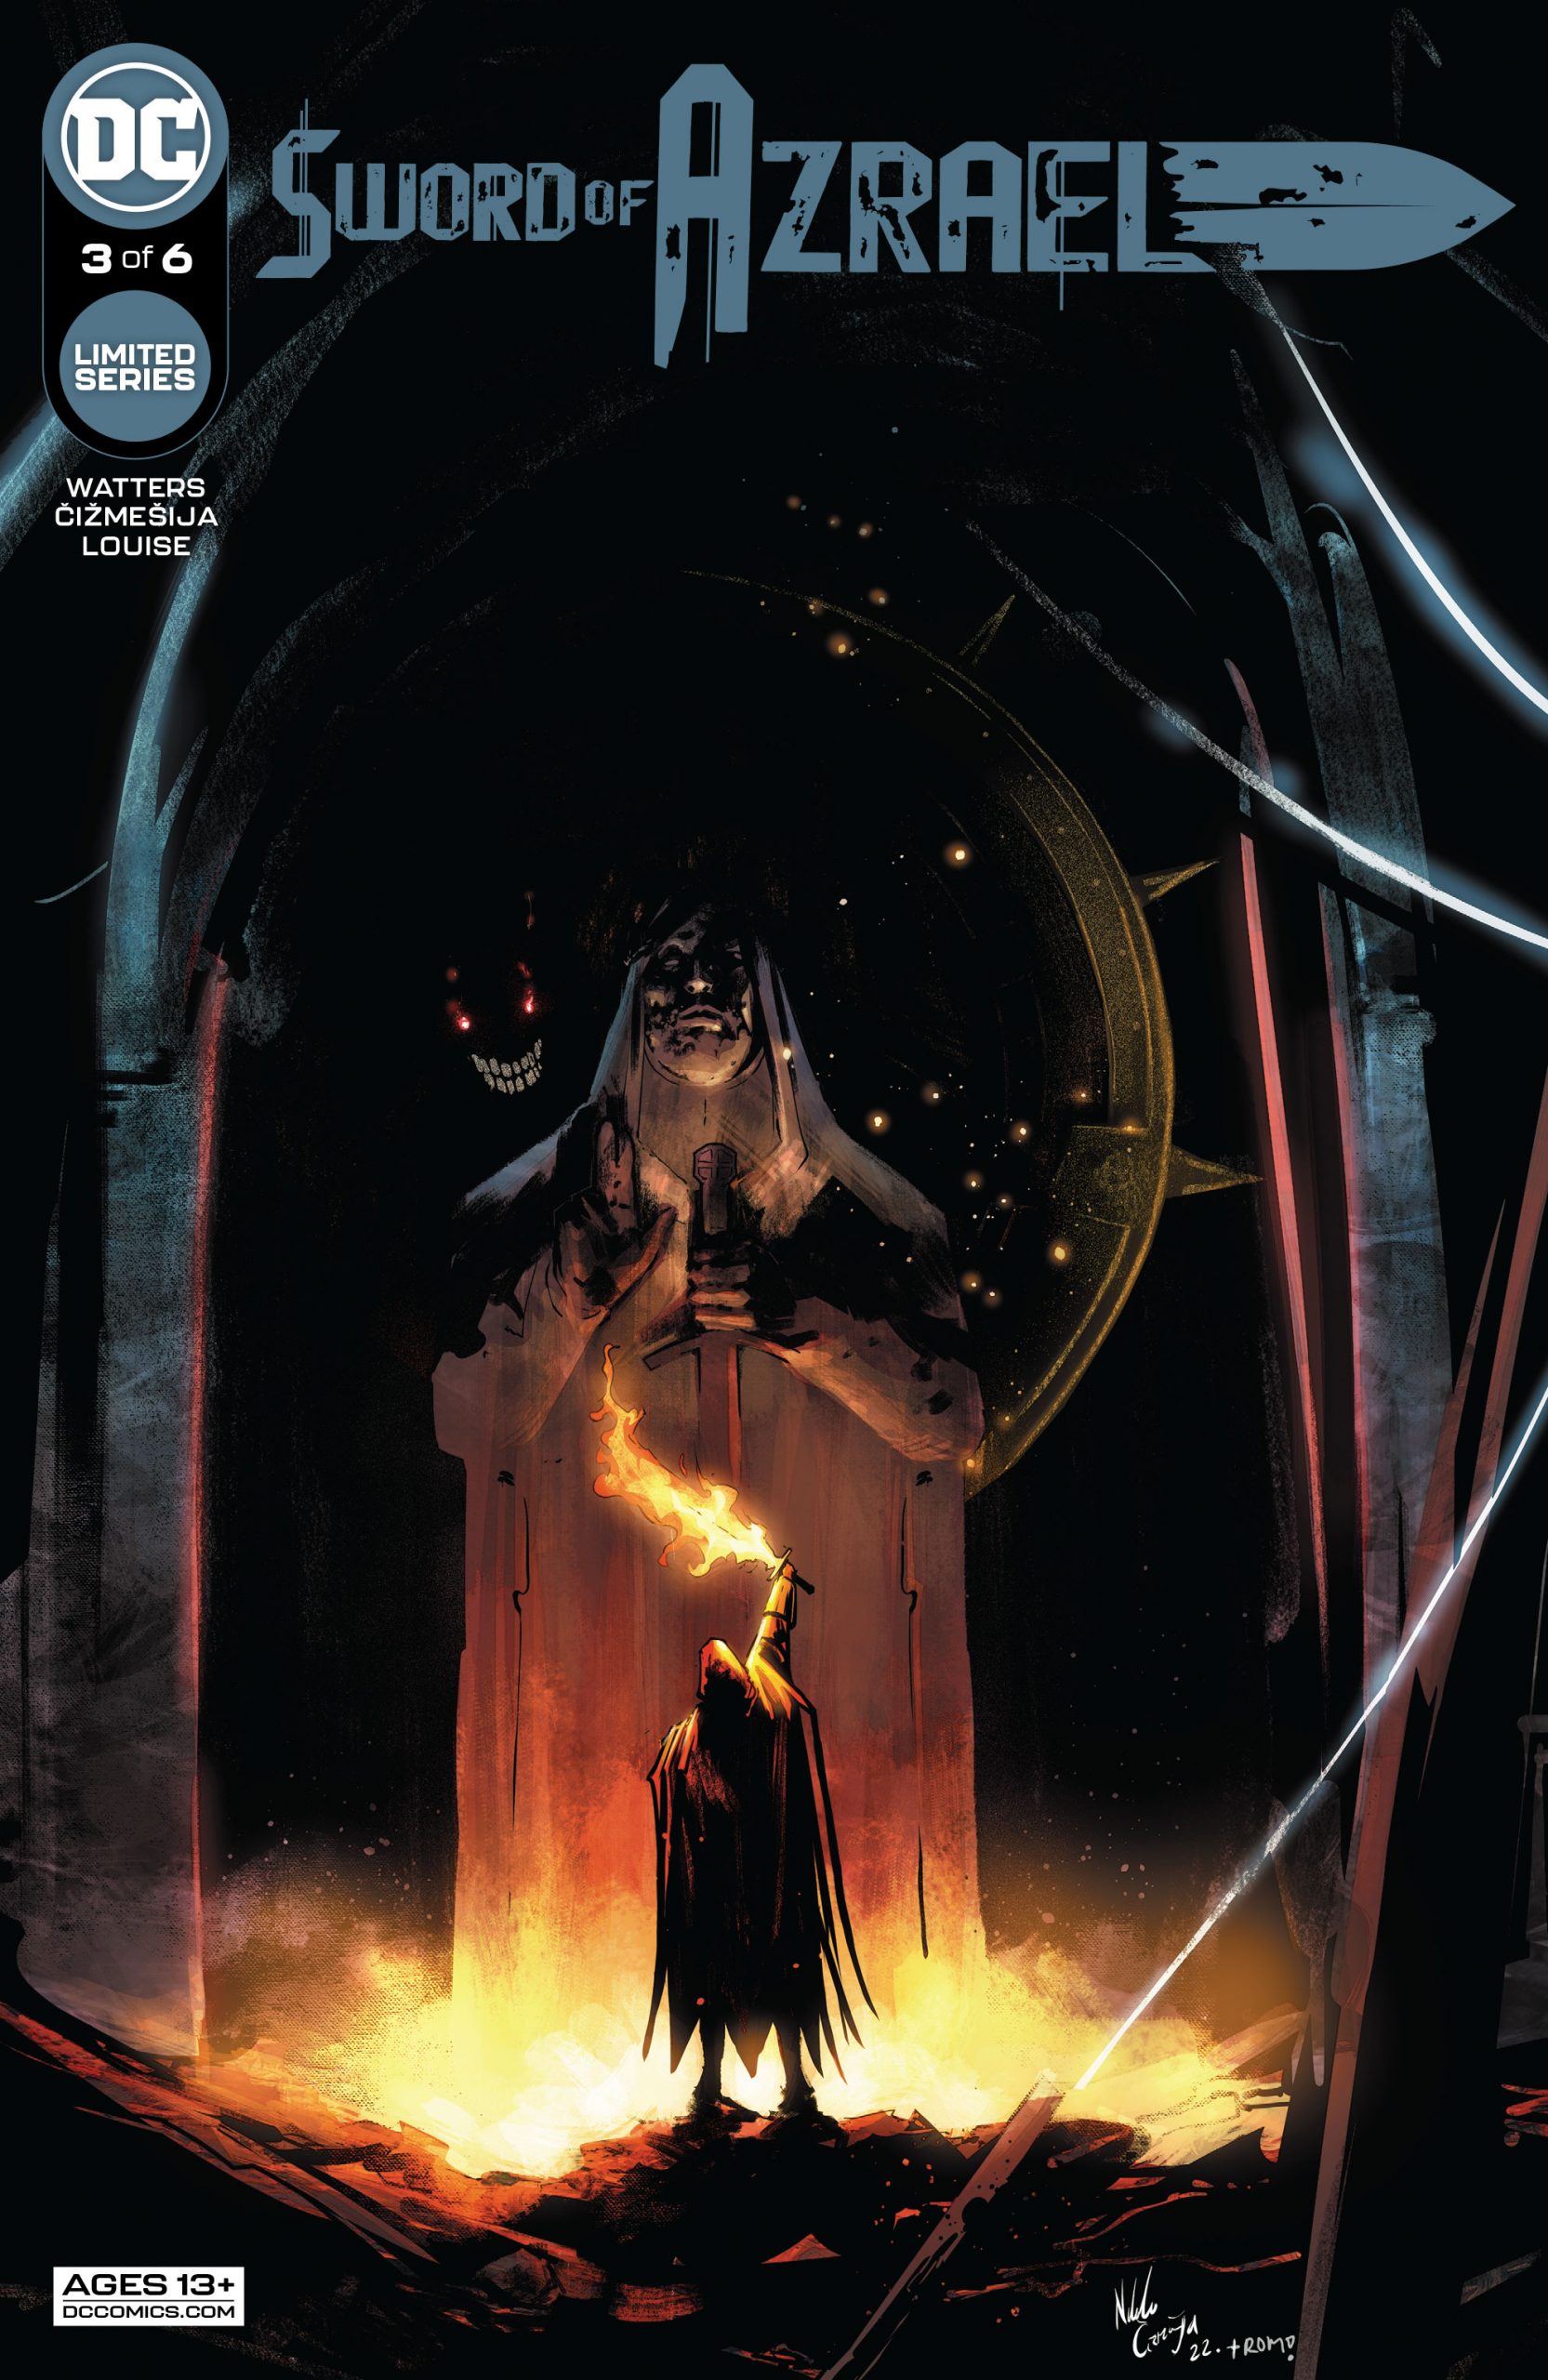 DC Preview: Sword of Azrael #3